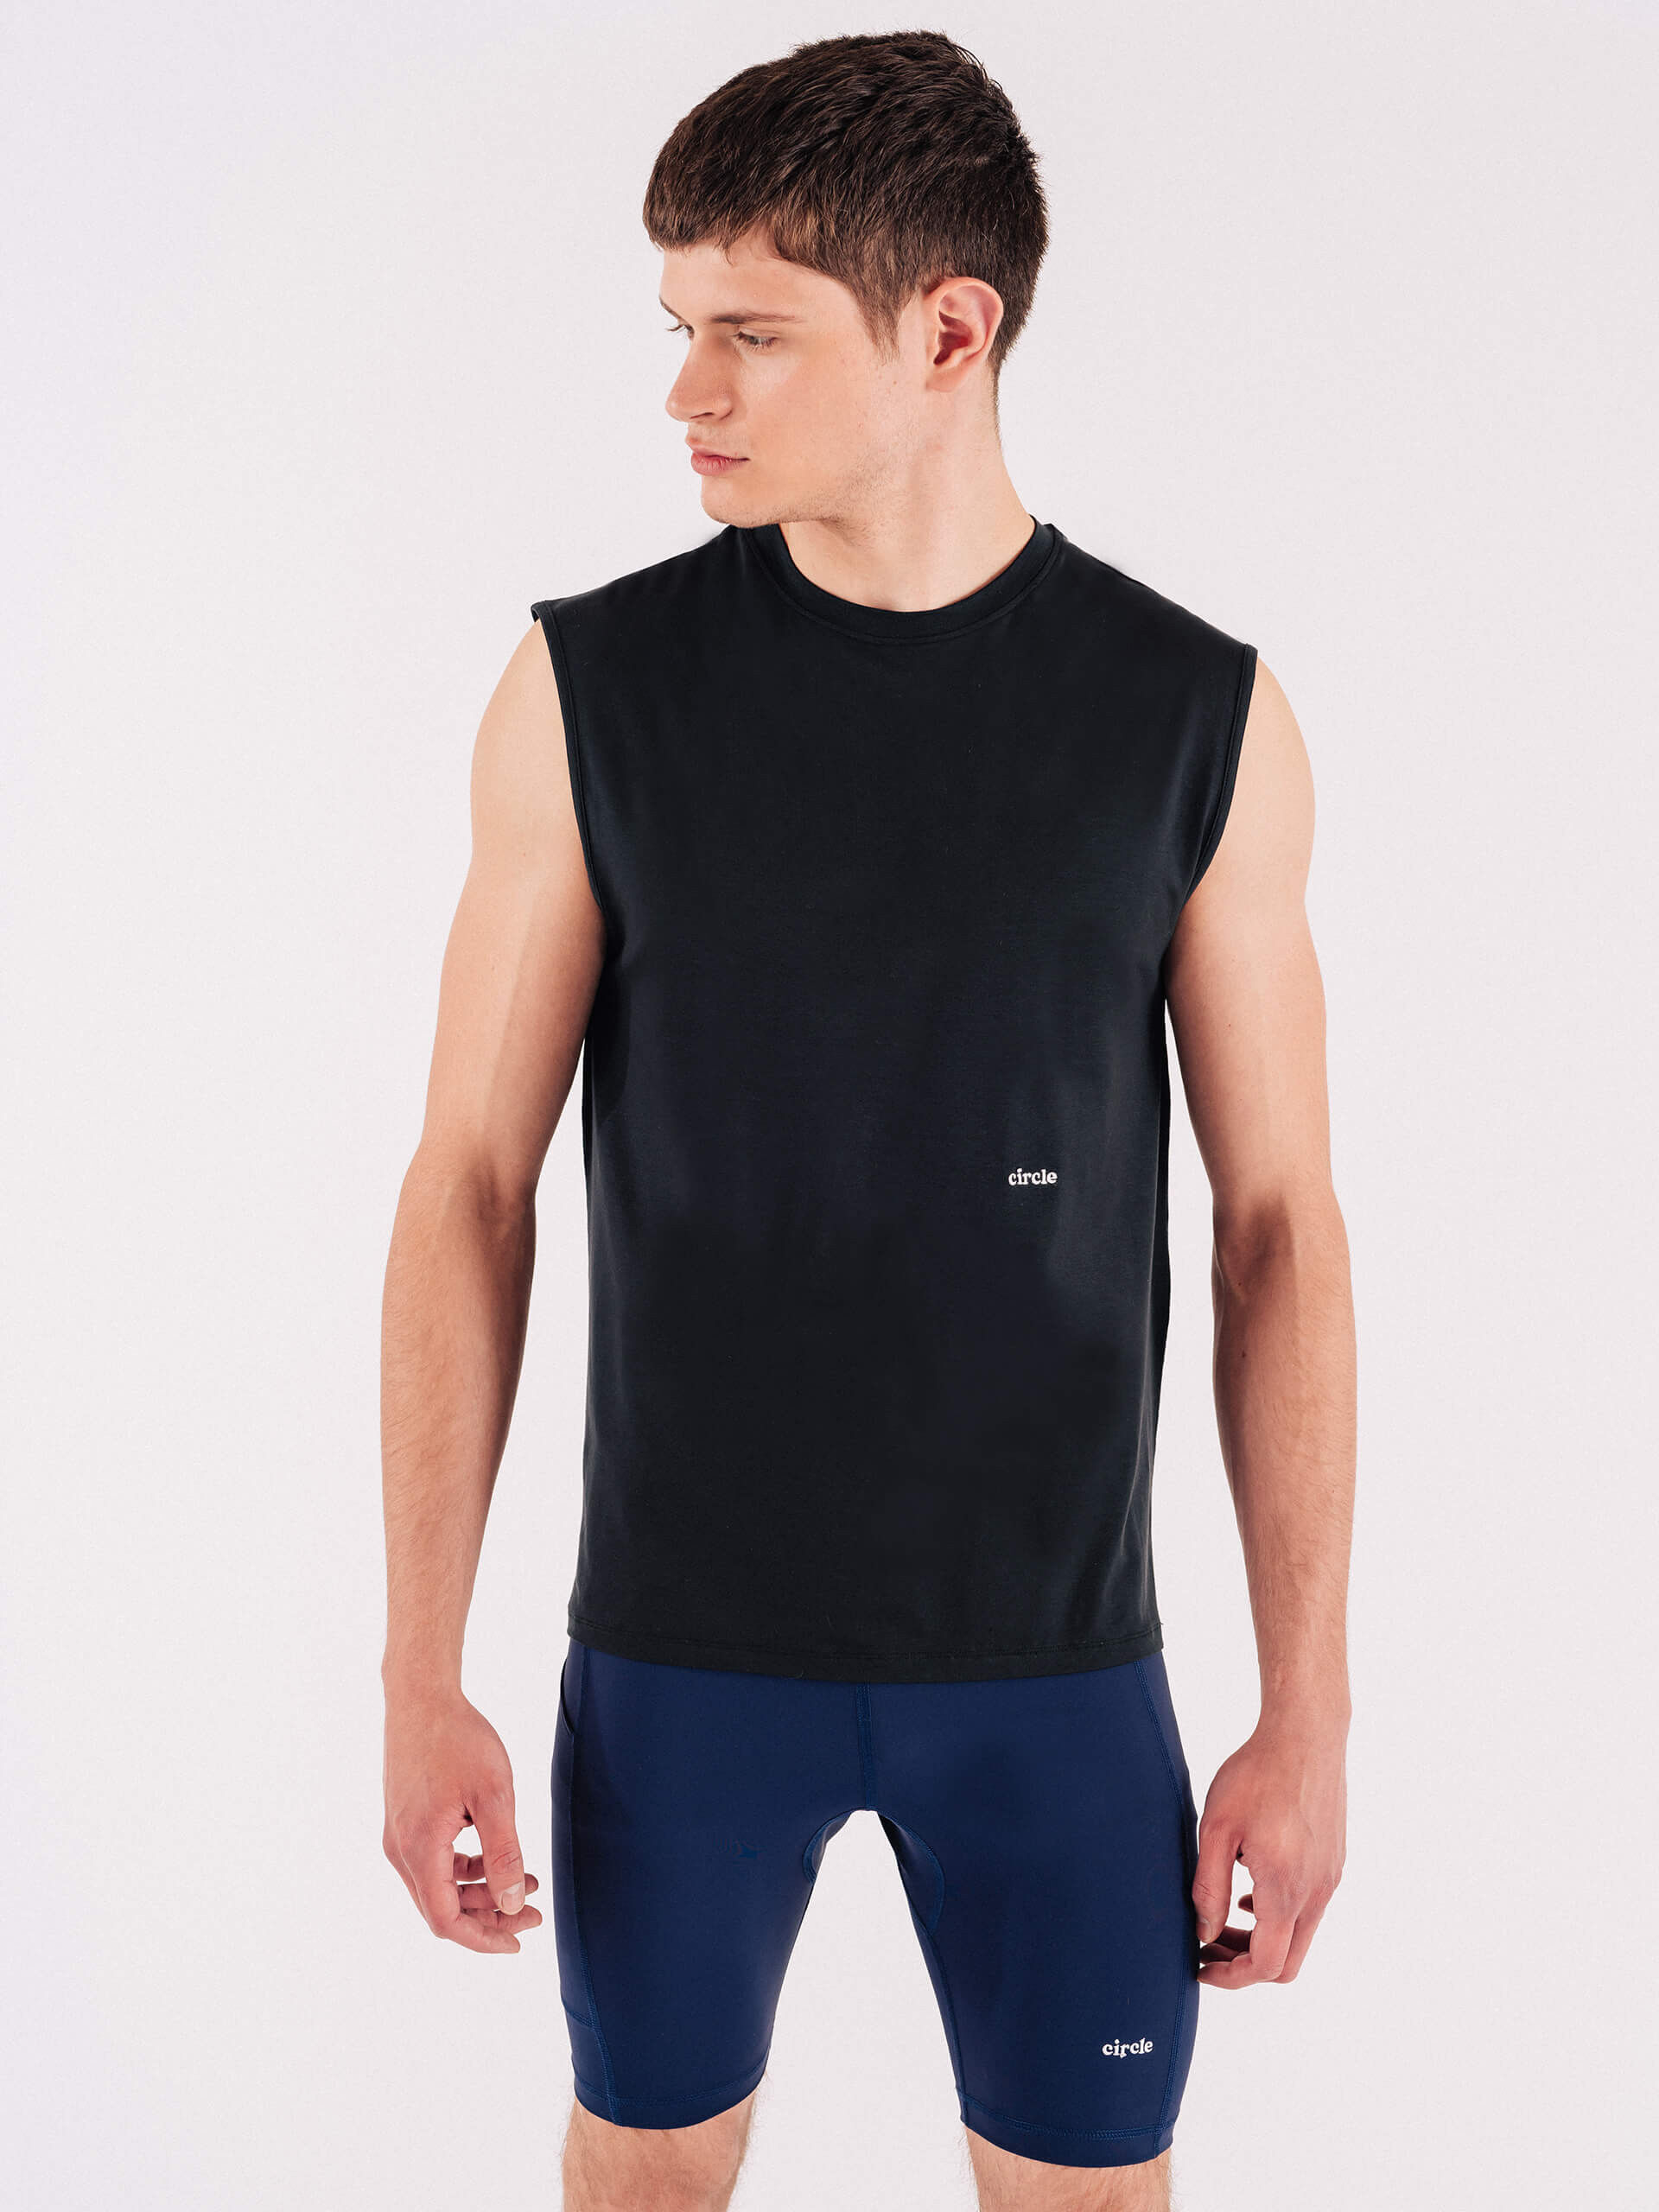 Circle Sportswear Muscle Tee - T-shirt - Men's